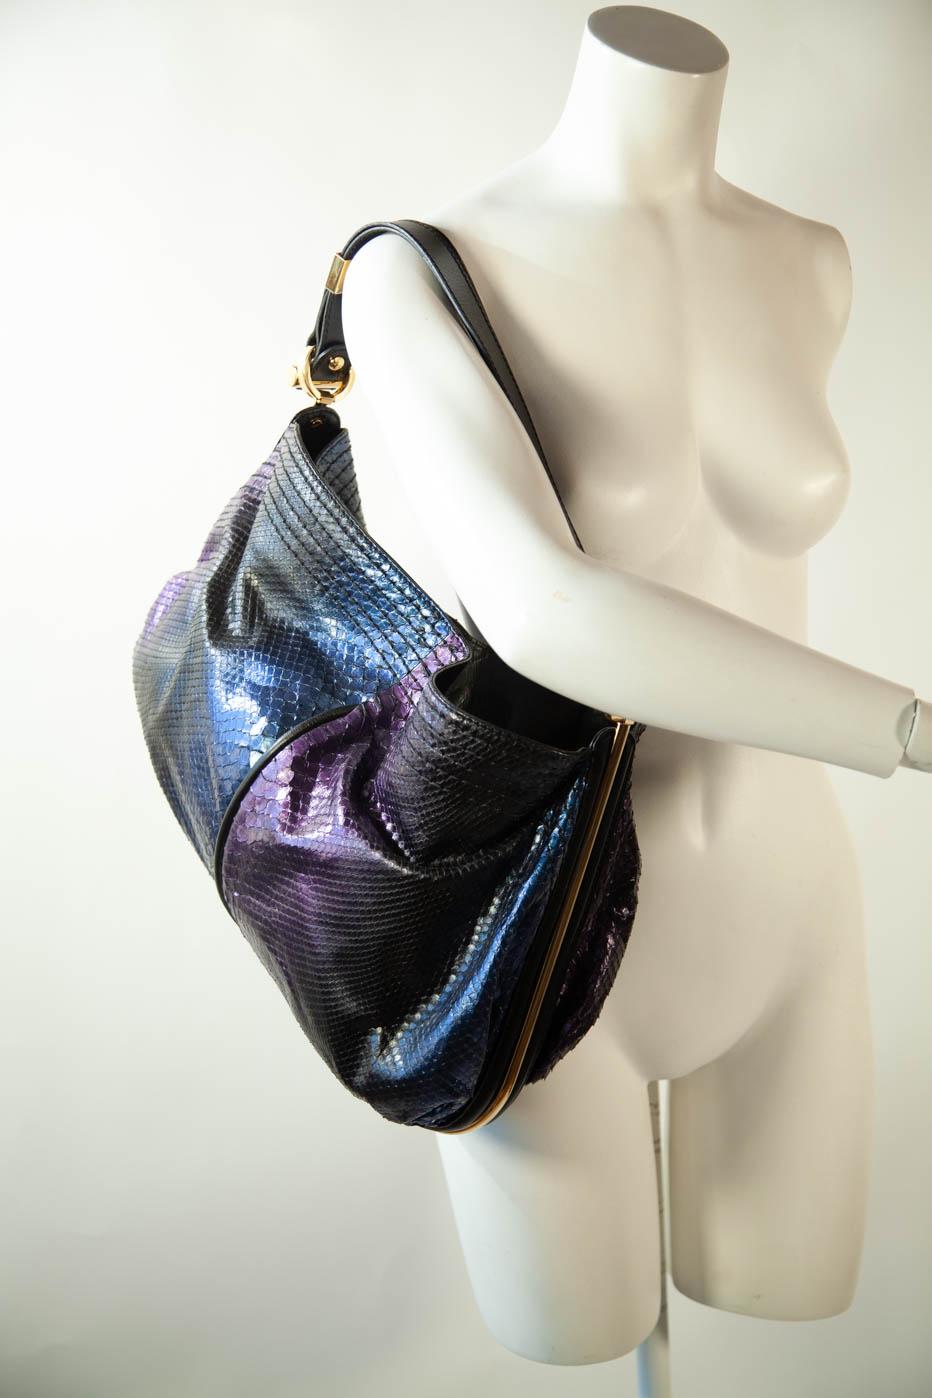 Jimmy Choo blue and purple metallic python snakeskin tote bag 

19